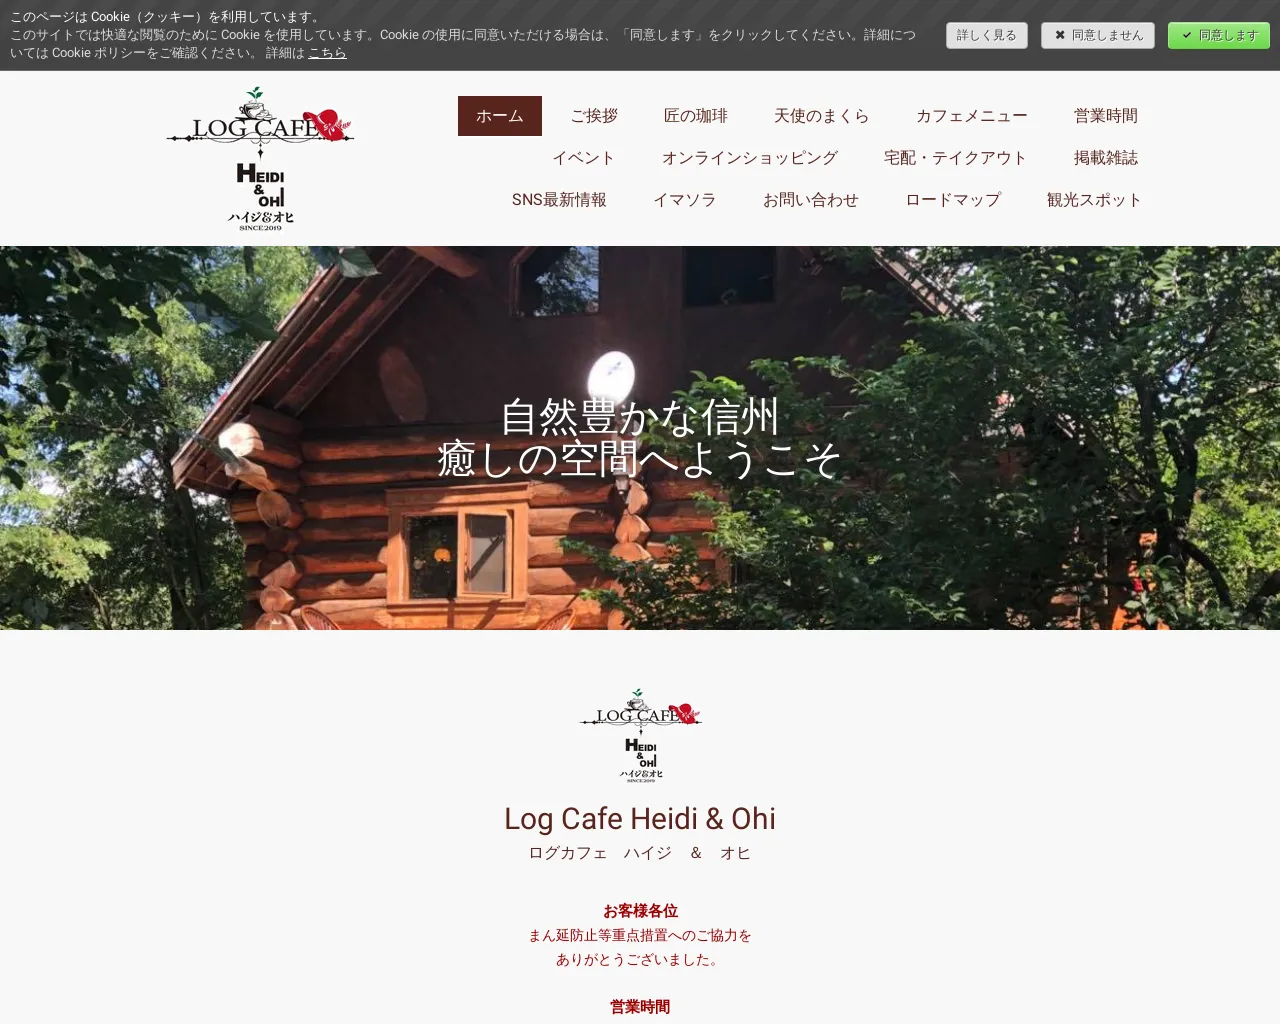 Log Cafe Heidi & Ohi site